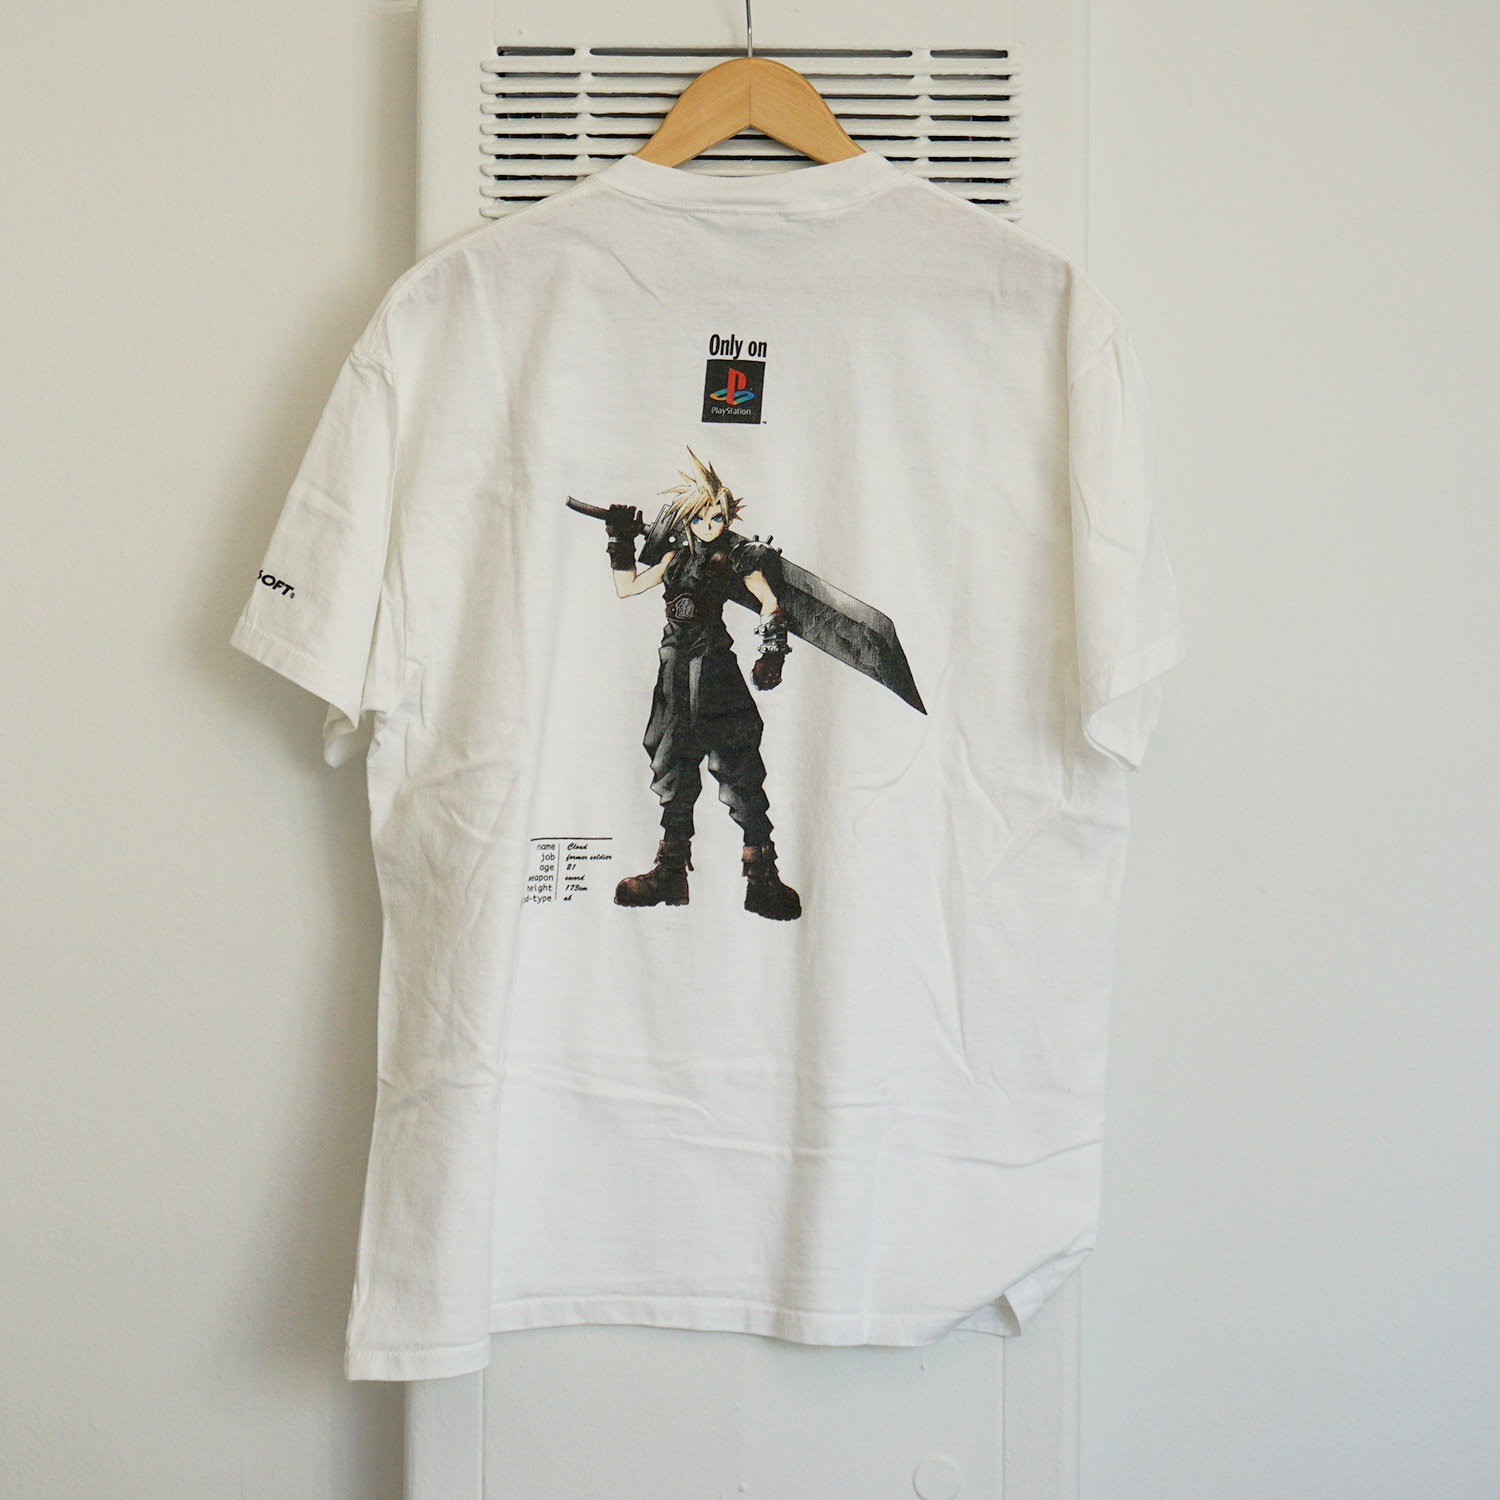 Vintage Final Fantasy VII T-shirt with Light Stain, Back